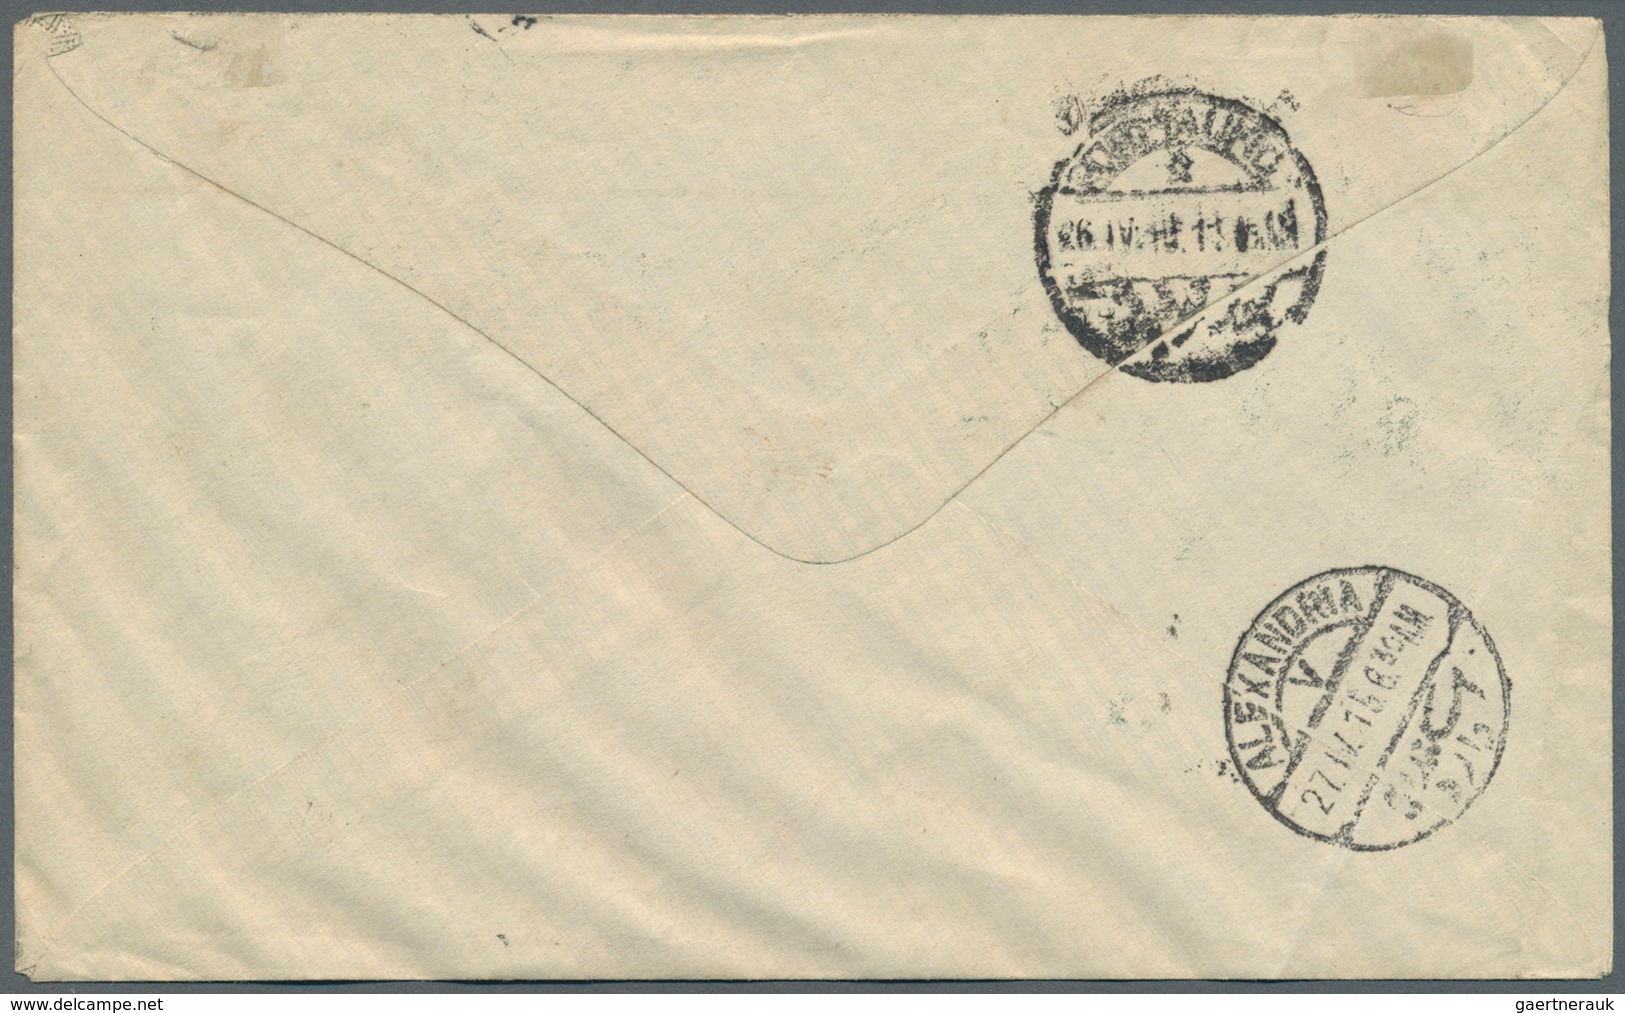 Aden: 1915 "Egyptian Cigarette Manufactory BRITANNIA In ADEN": Two Advertising Envelopes (one In Bro - Aden (1854-1963)